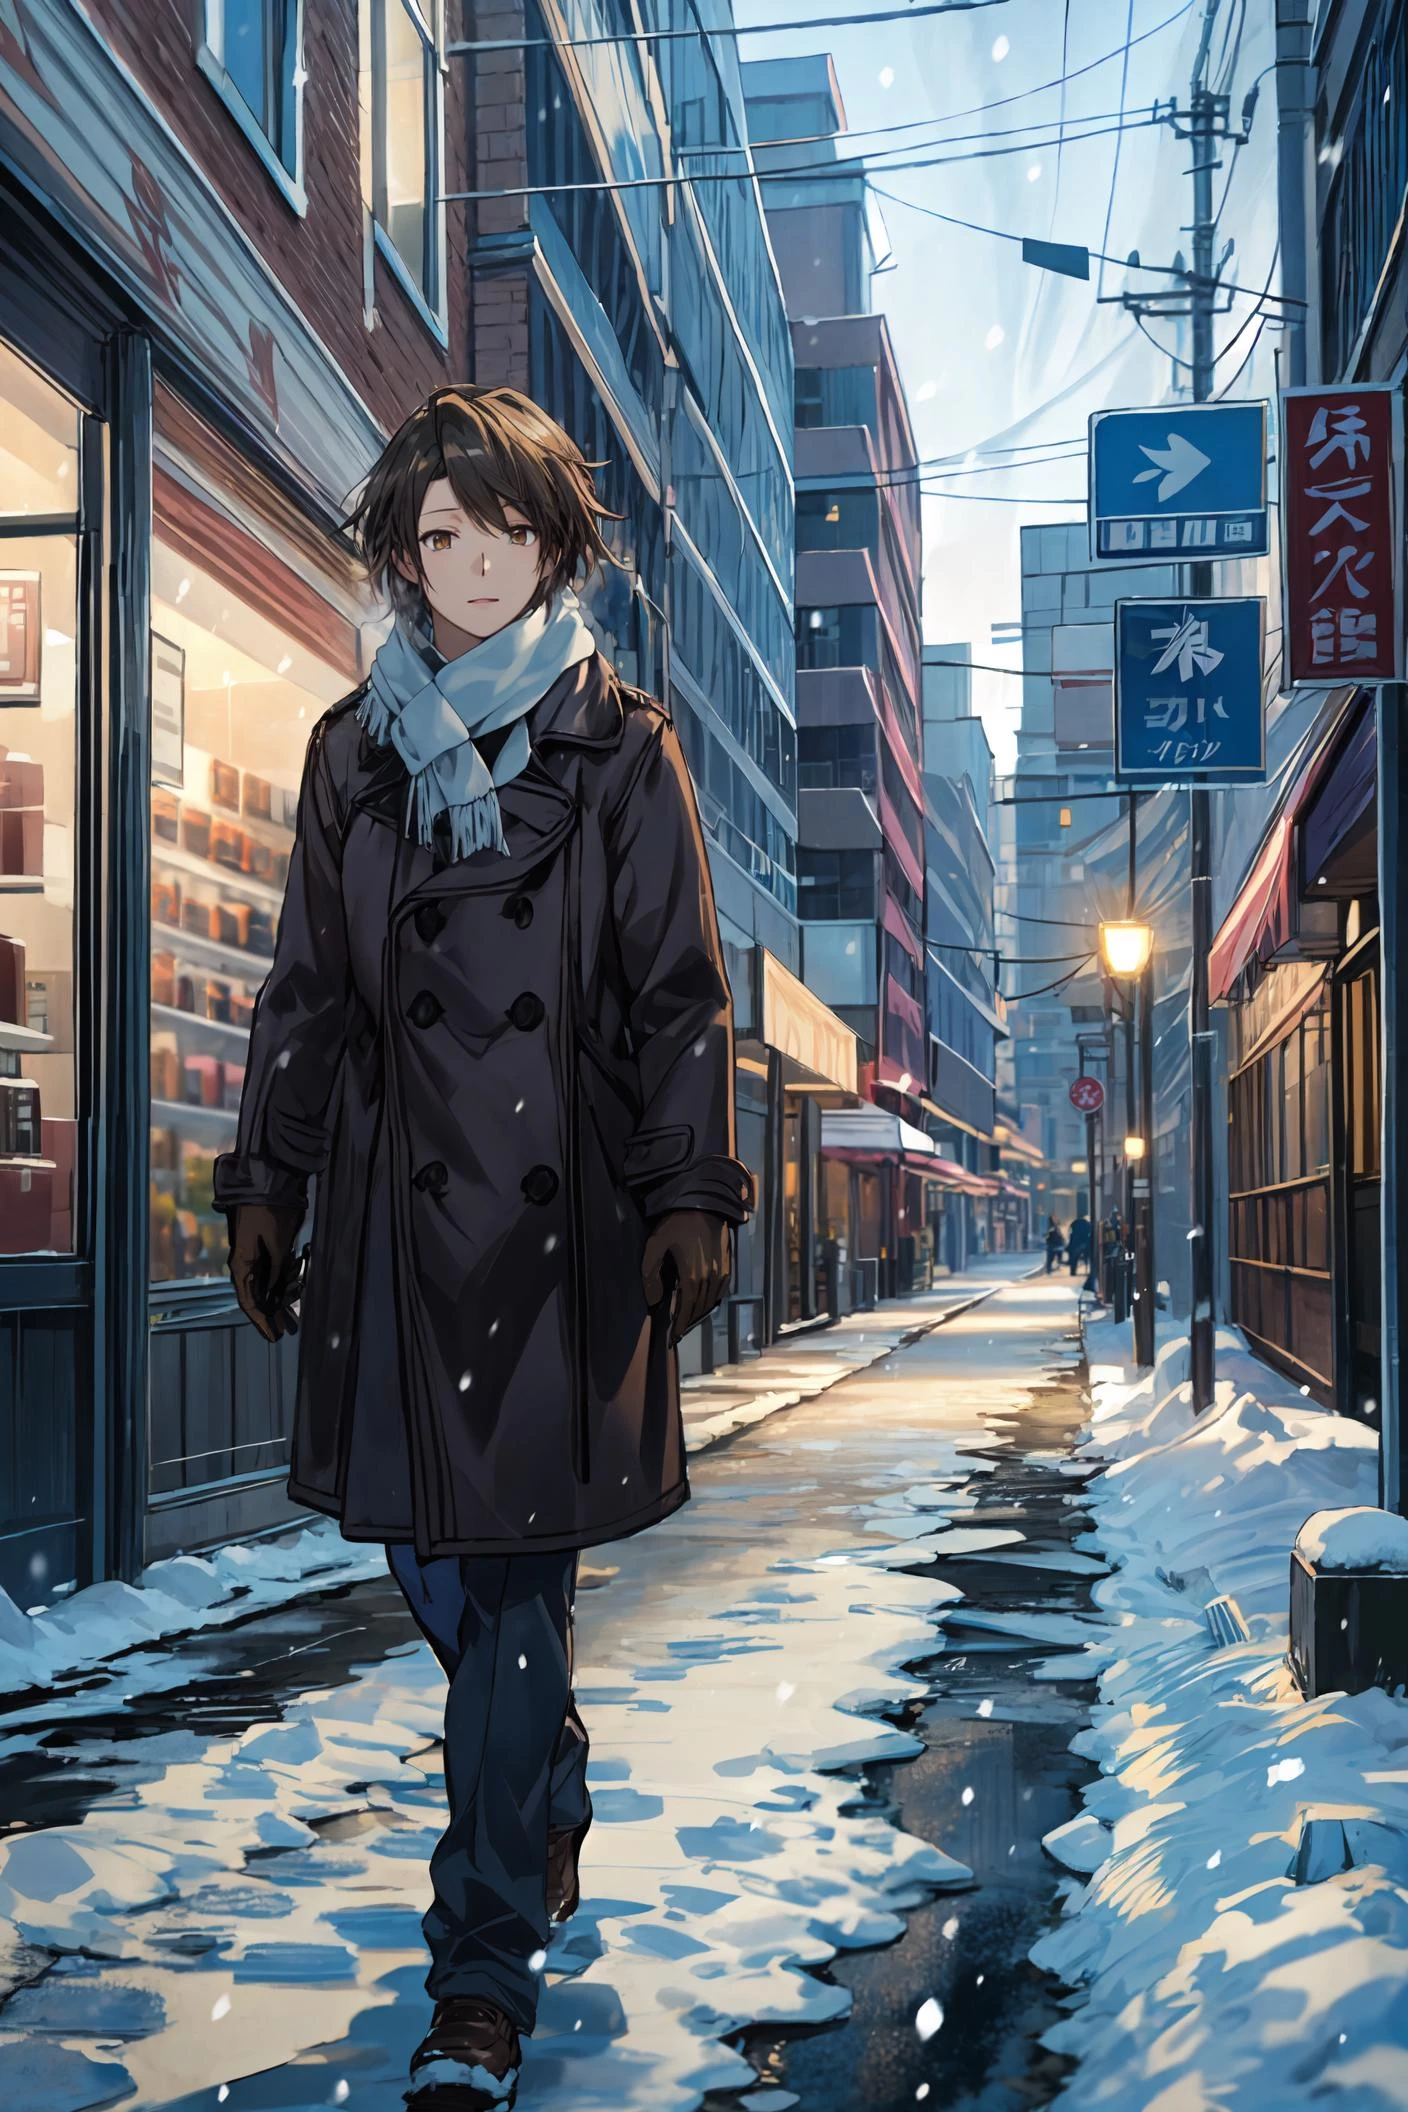 (masterpiece),best quality, Itsuki, coat, scarf, gloves, winter, snowing,snow, walking, street, shop, sidewalk, cloud, light sunlight,breath, looking at the viewer, 